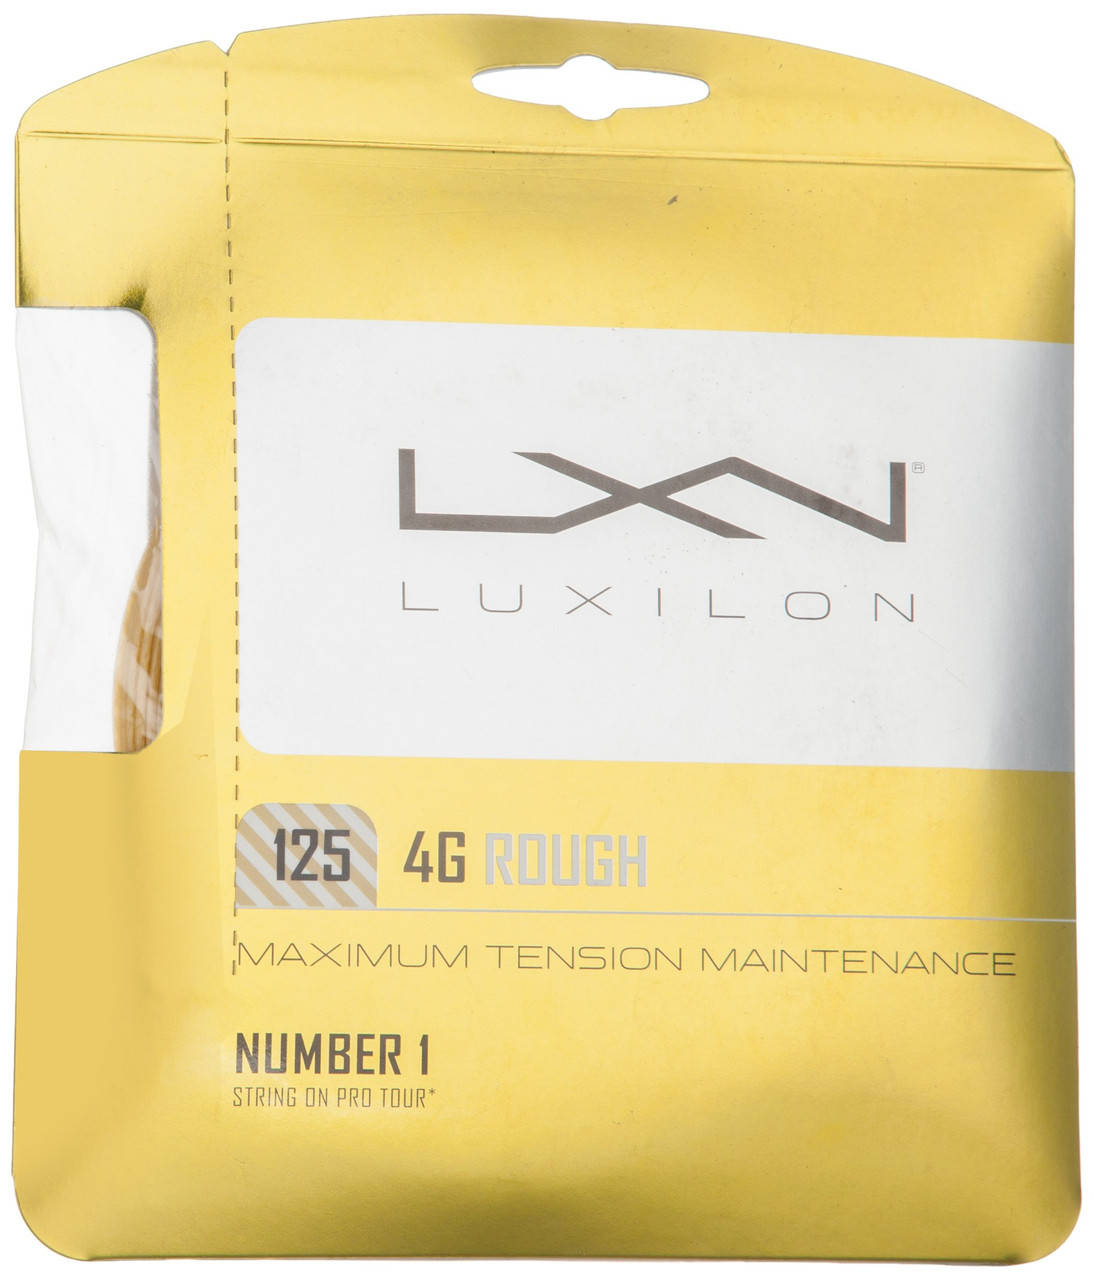 Luxilon 4G Rough Tennis String, Gold, 16L Gauge/1.25mm - paddlepro